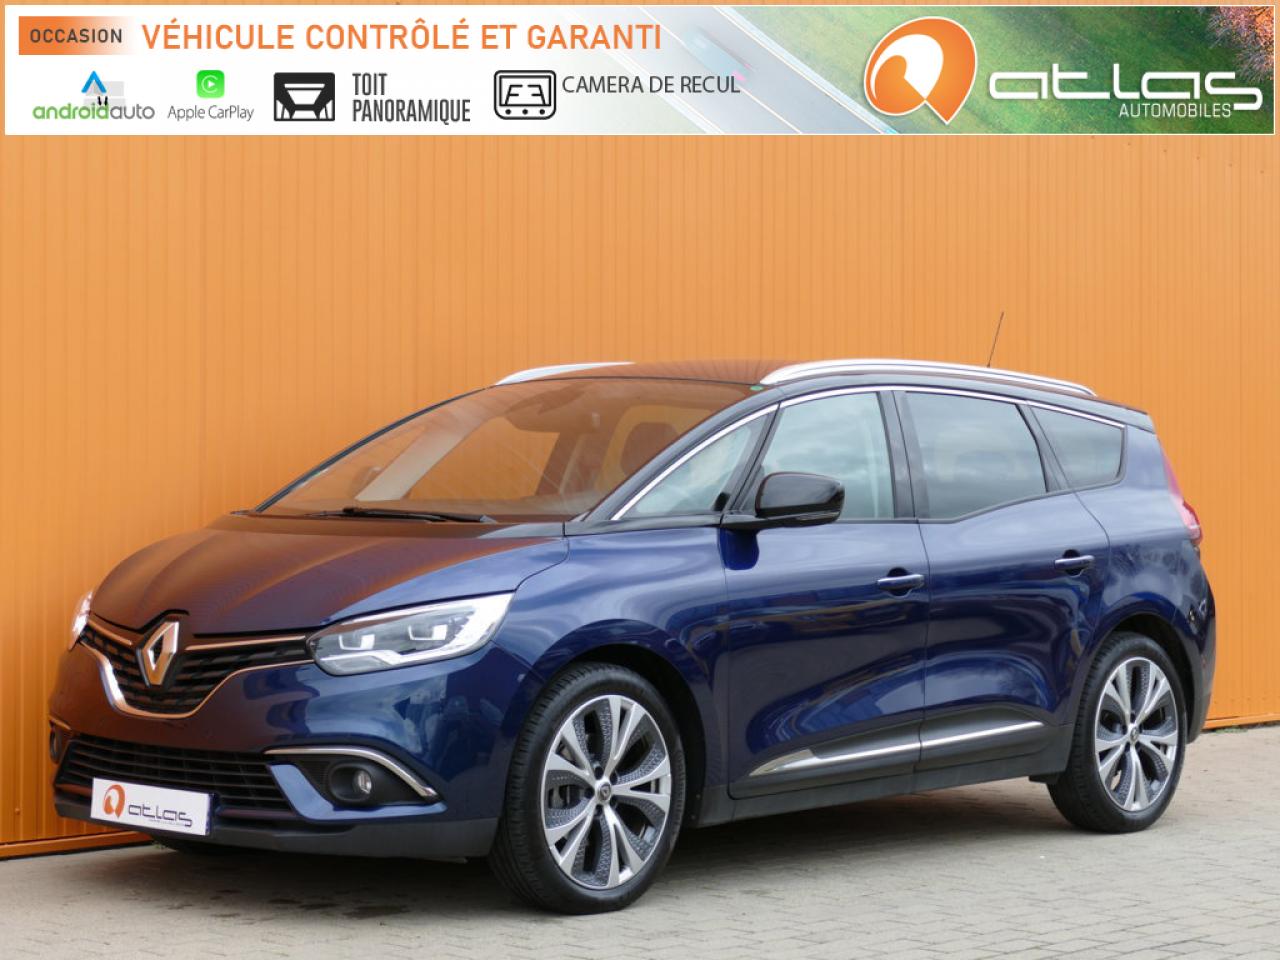 2018 Renault GRAND SCENIC